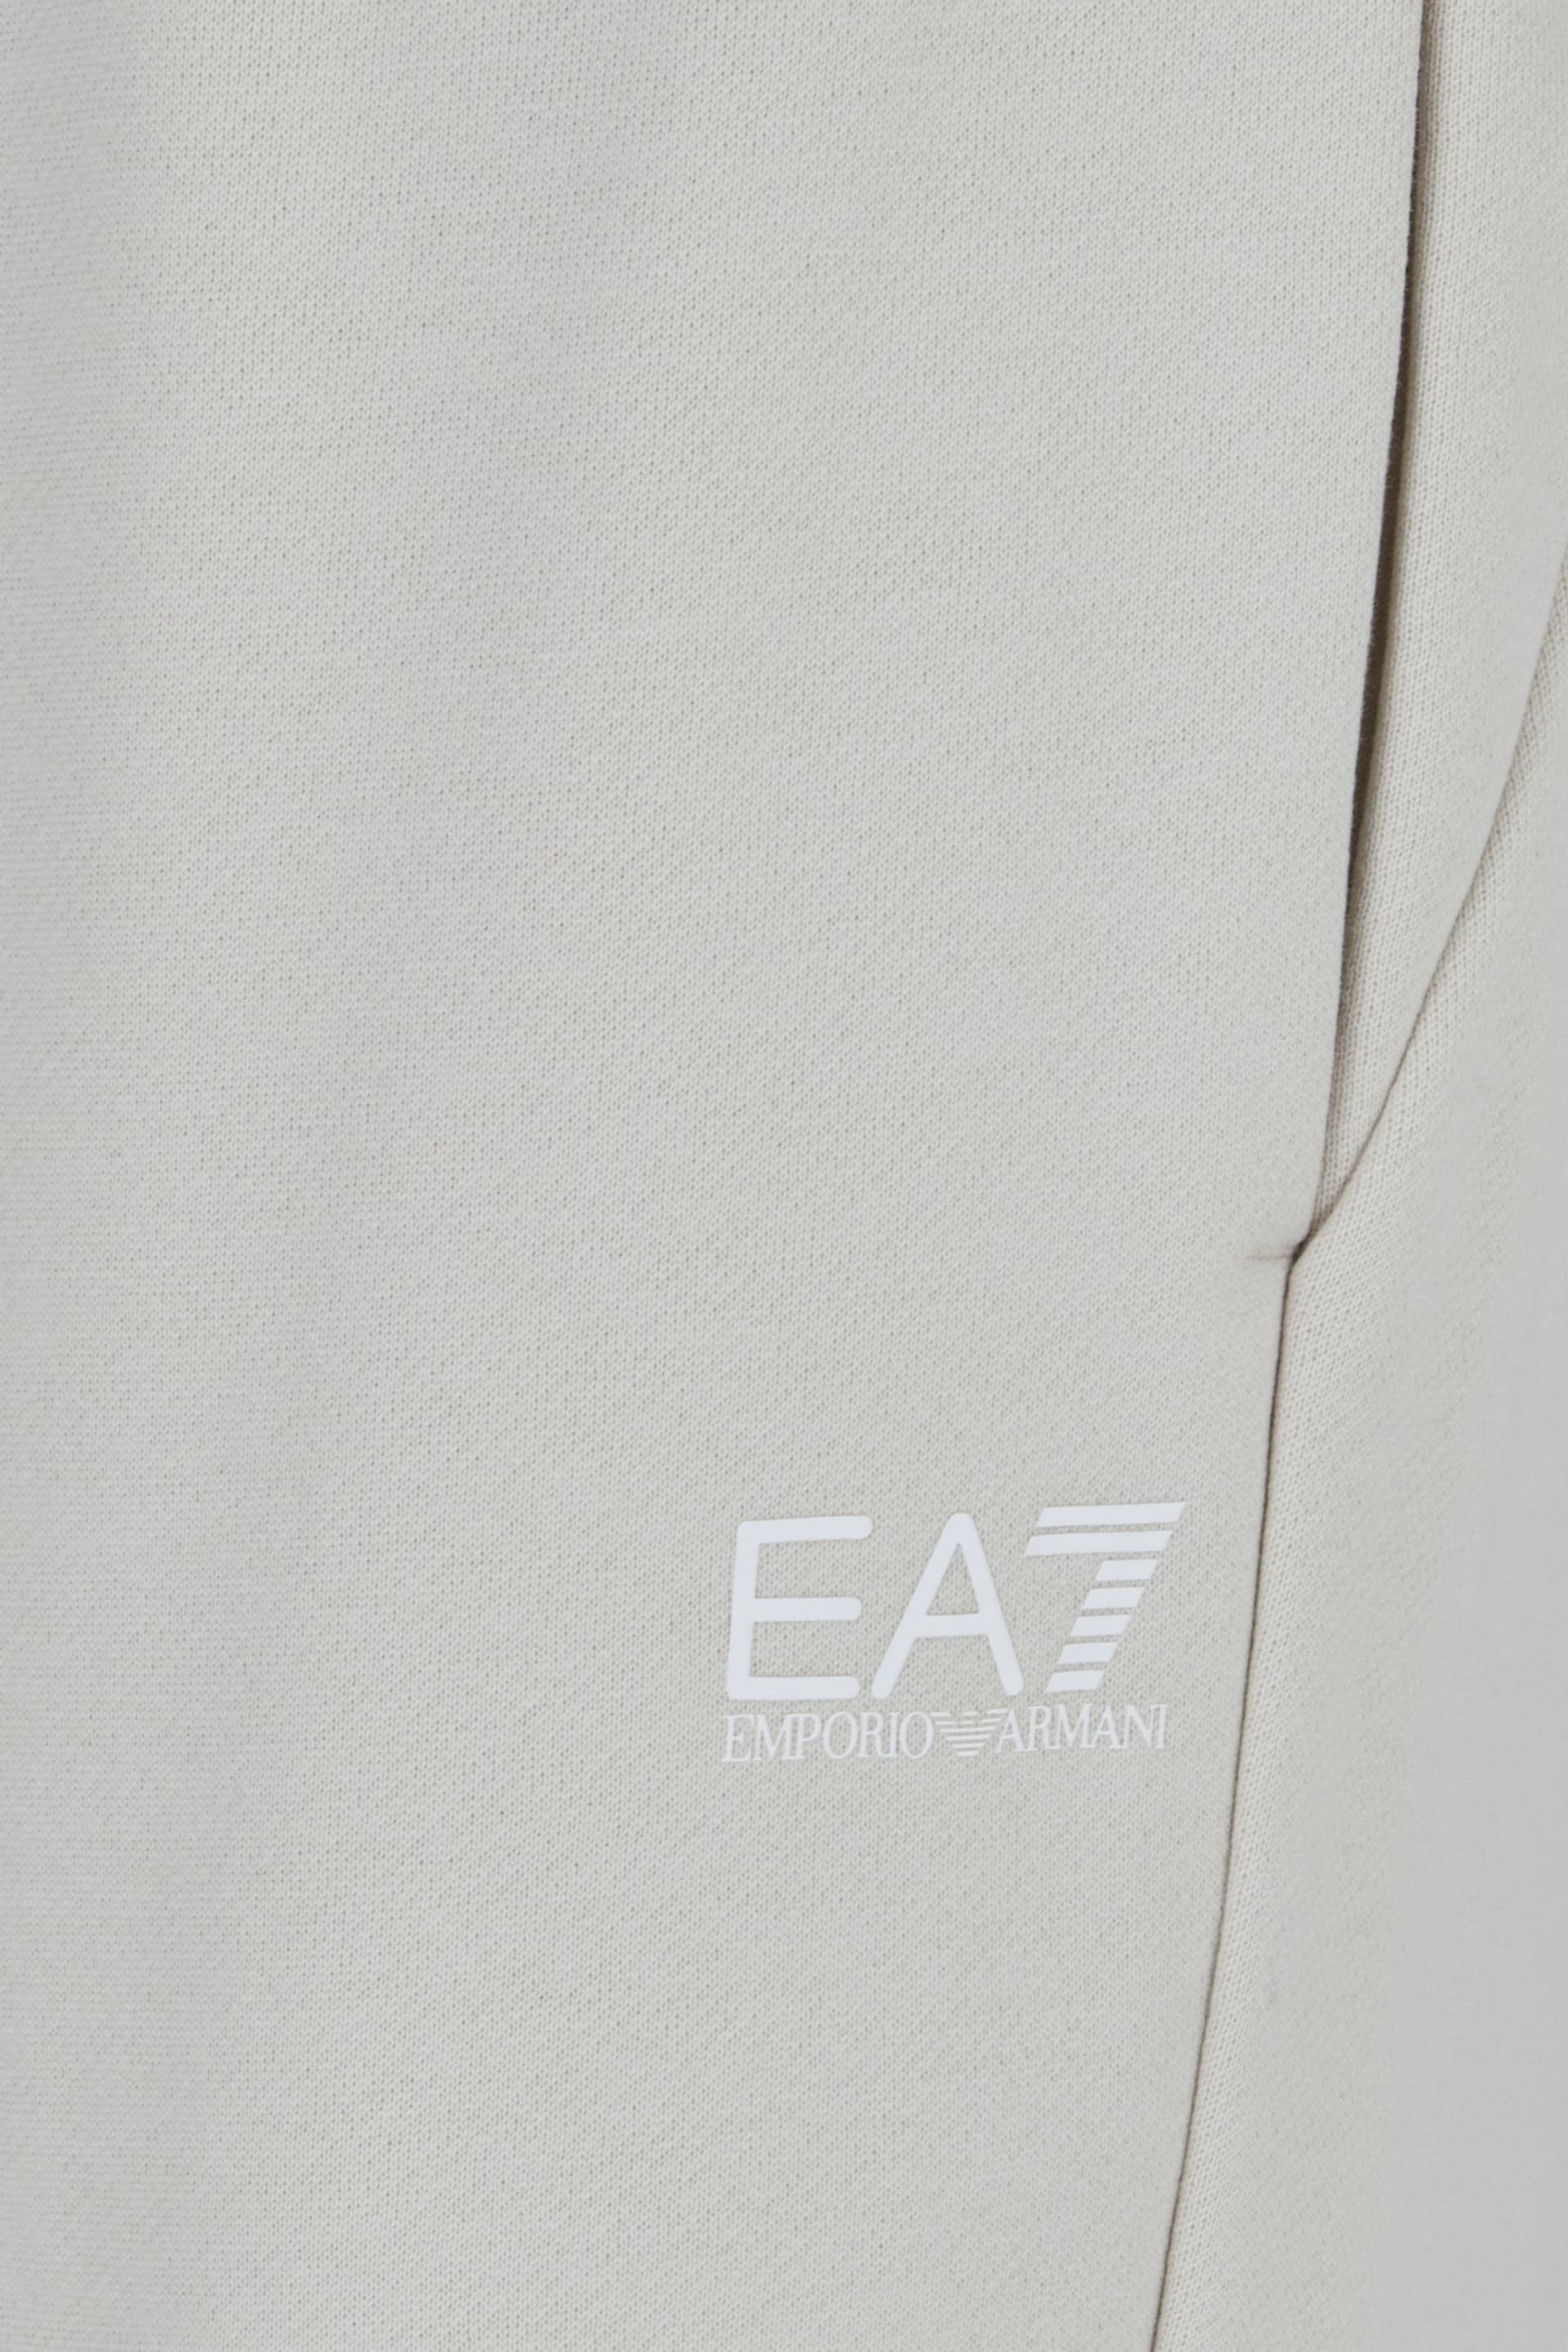 Emporio Armani EA7 Natural Visibility Back Logo Hooded Tracksuit - Image 4 of 4